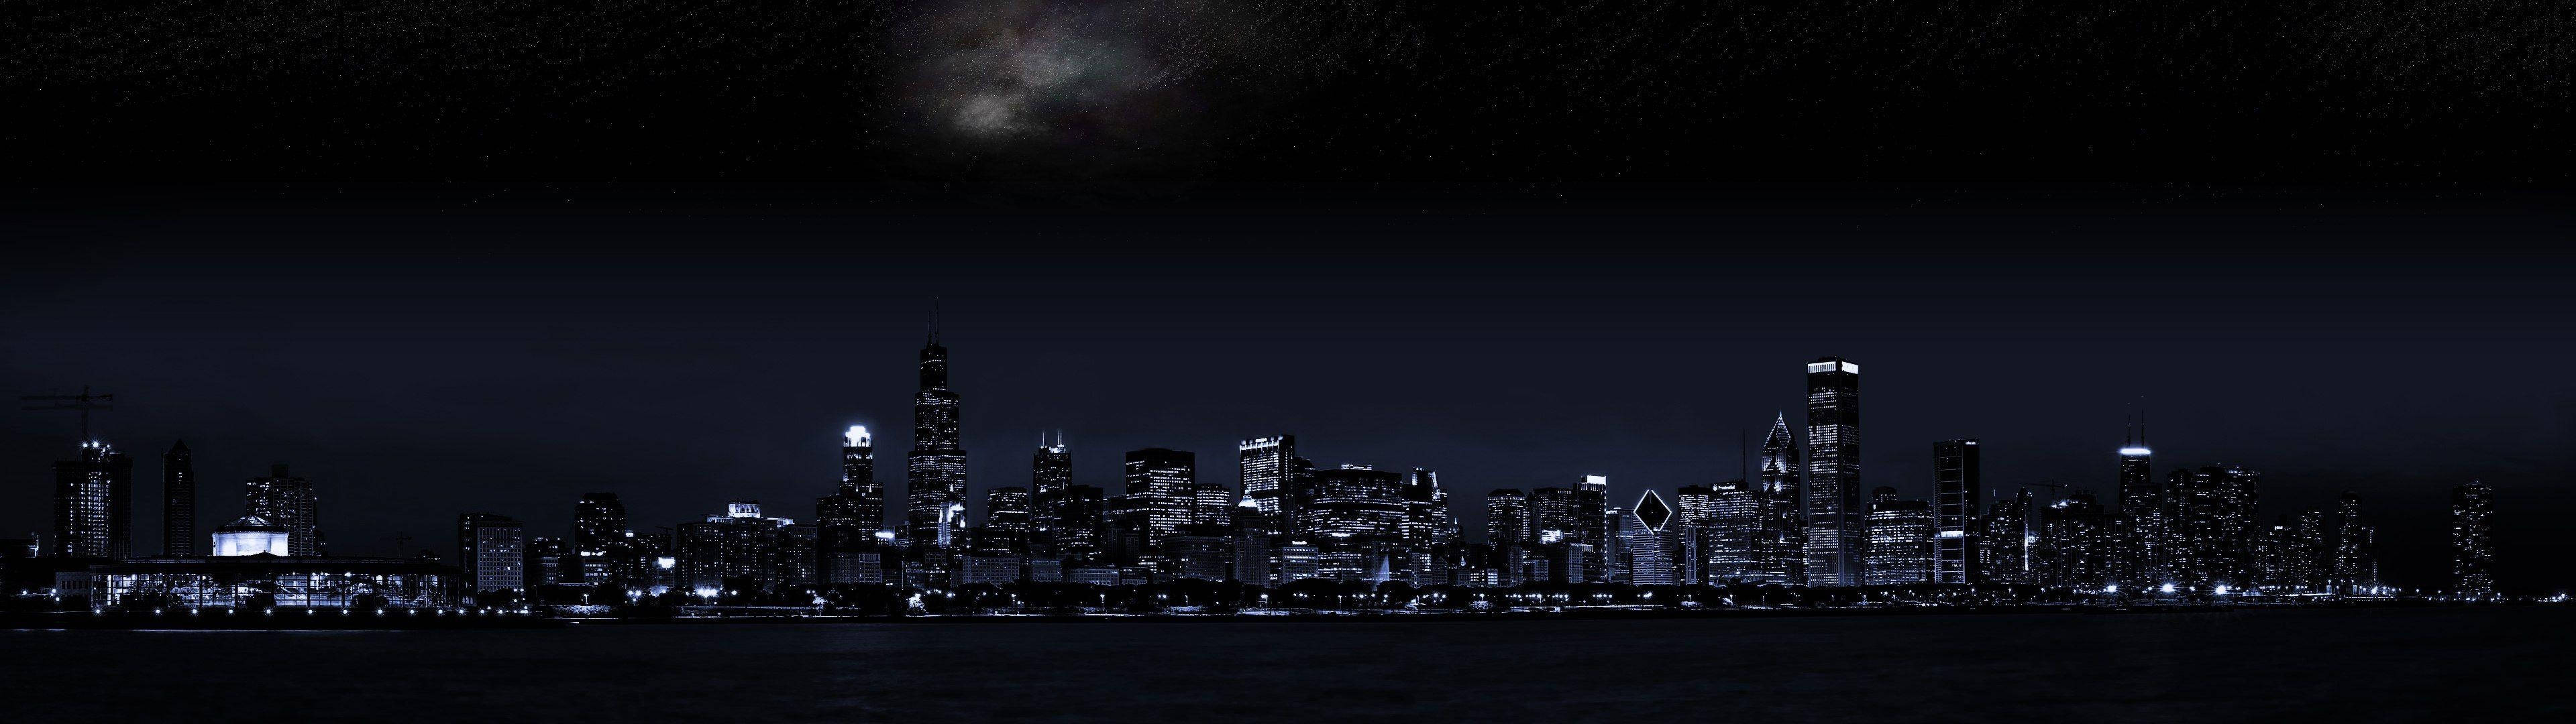 Panorama Urban City At Night Dark Aesthetic Wallpaper